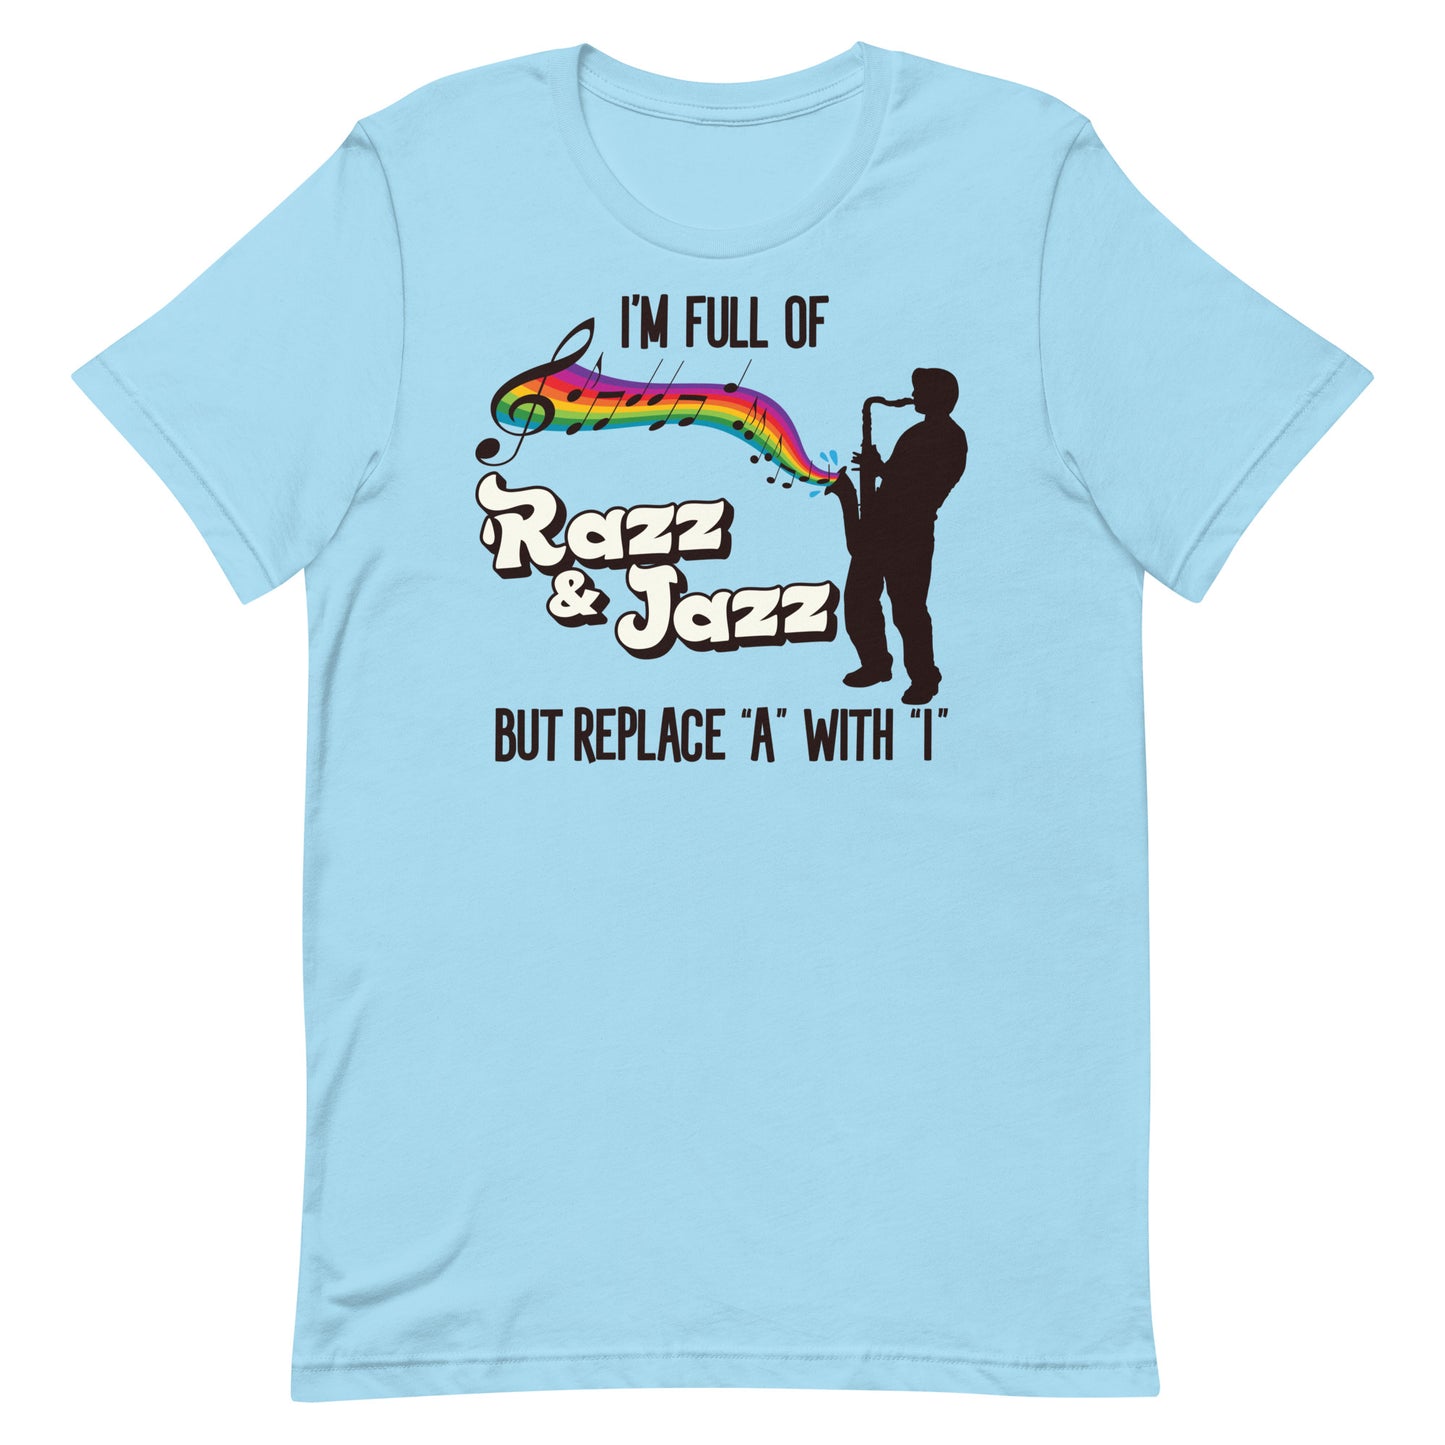 Full of Razz & Jazz Unisex t-shirt